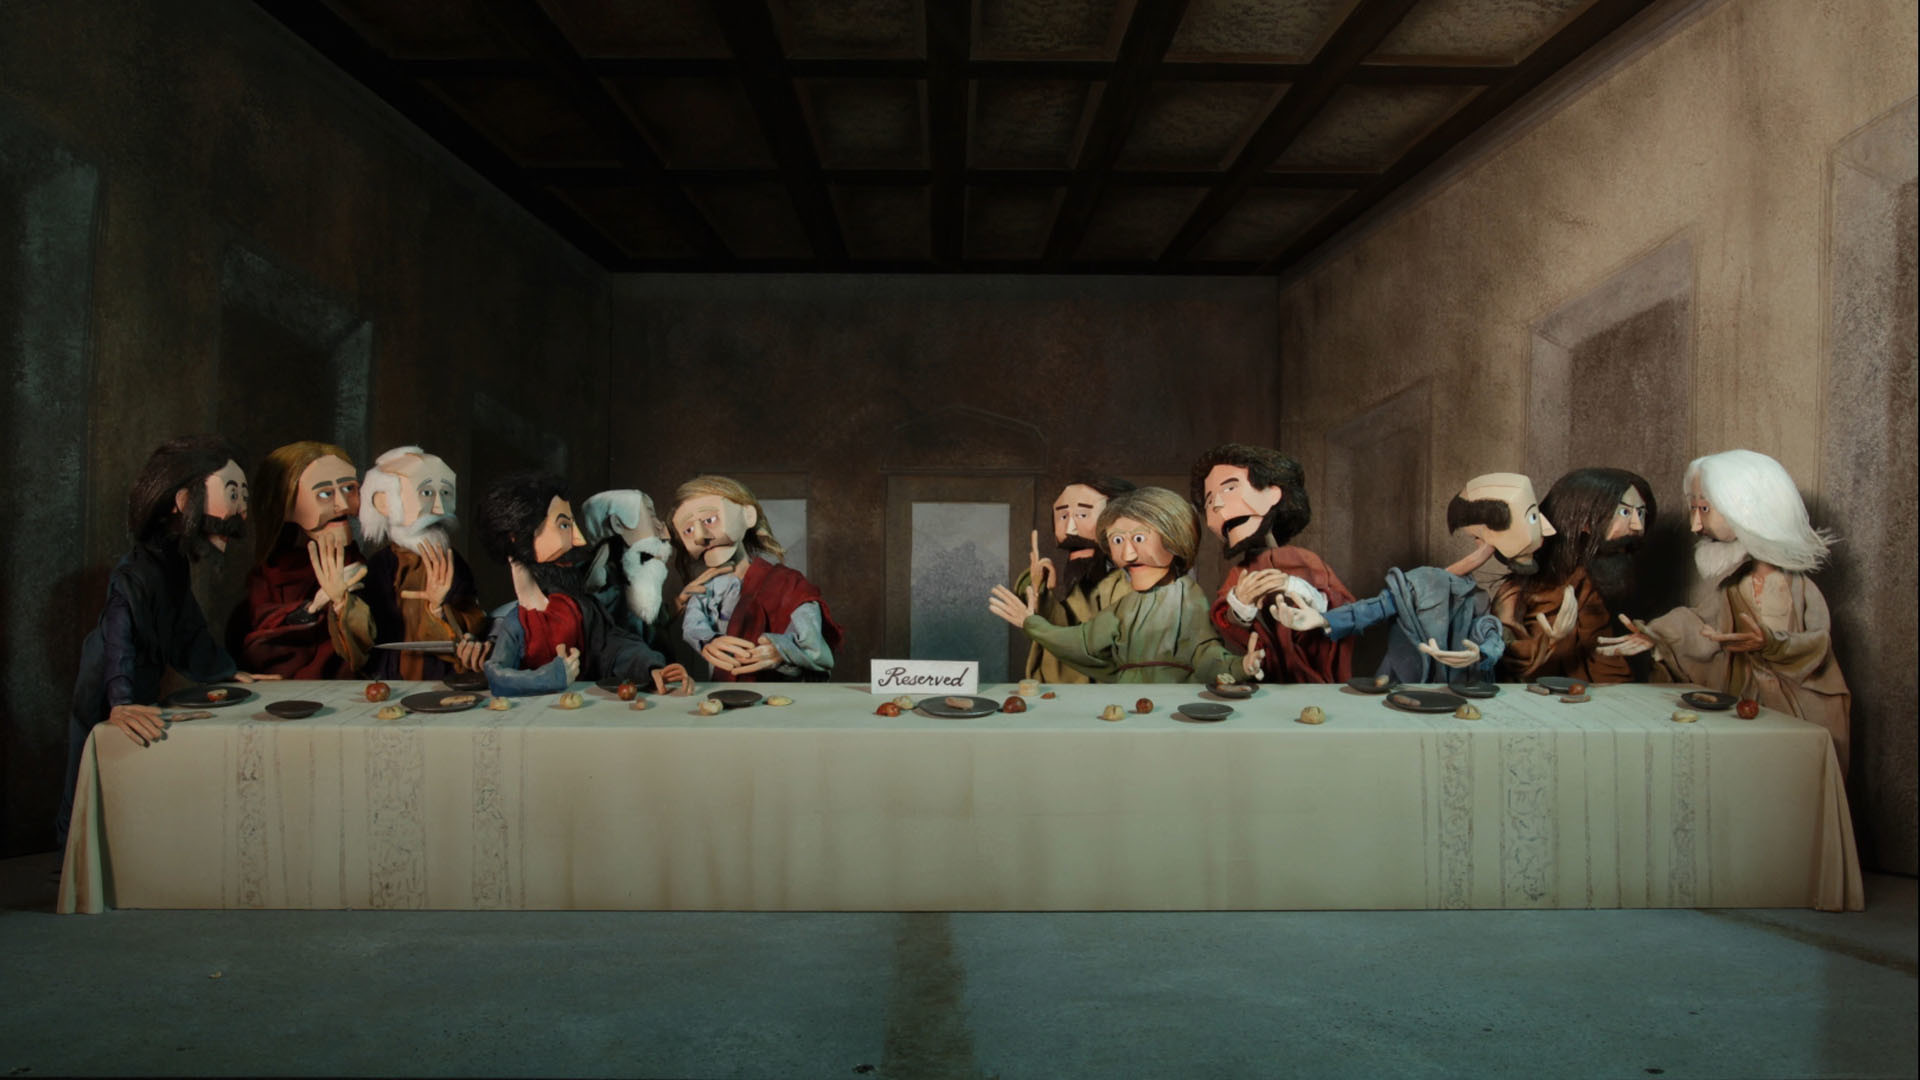 the last supper original painting by leonardo da vinci wallpaper,event,art,performance,performance art,stage